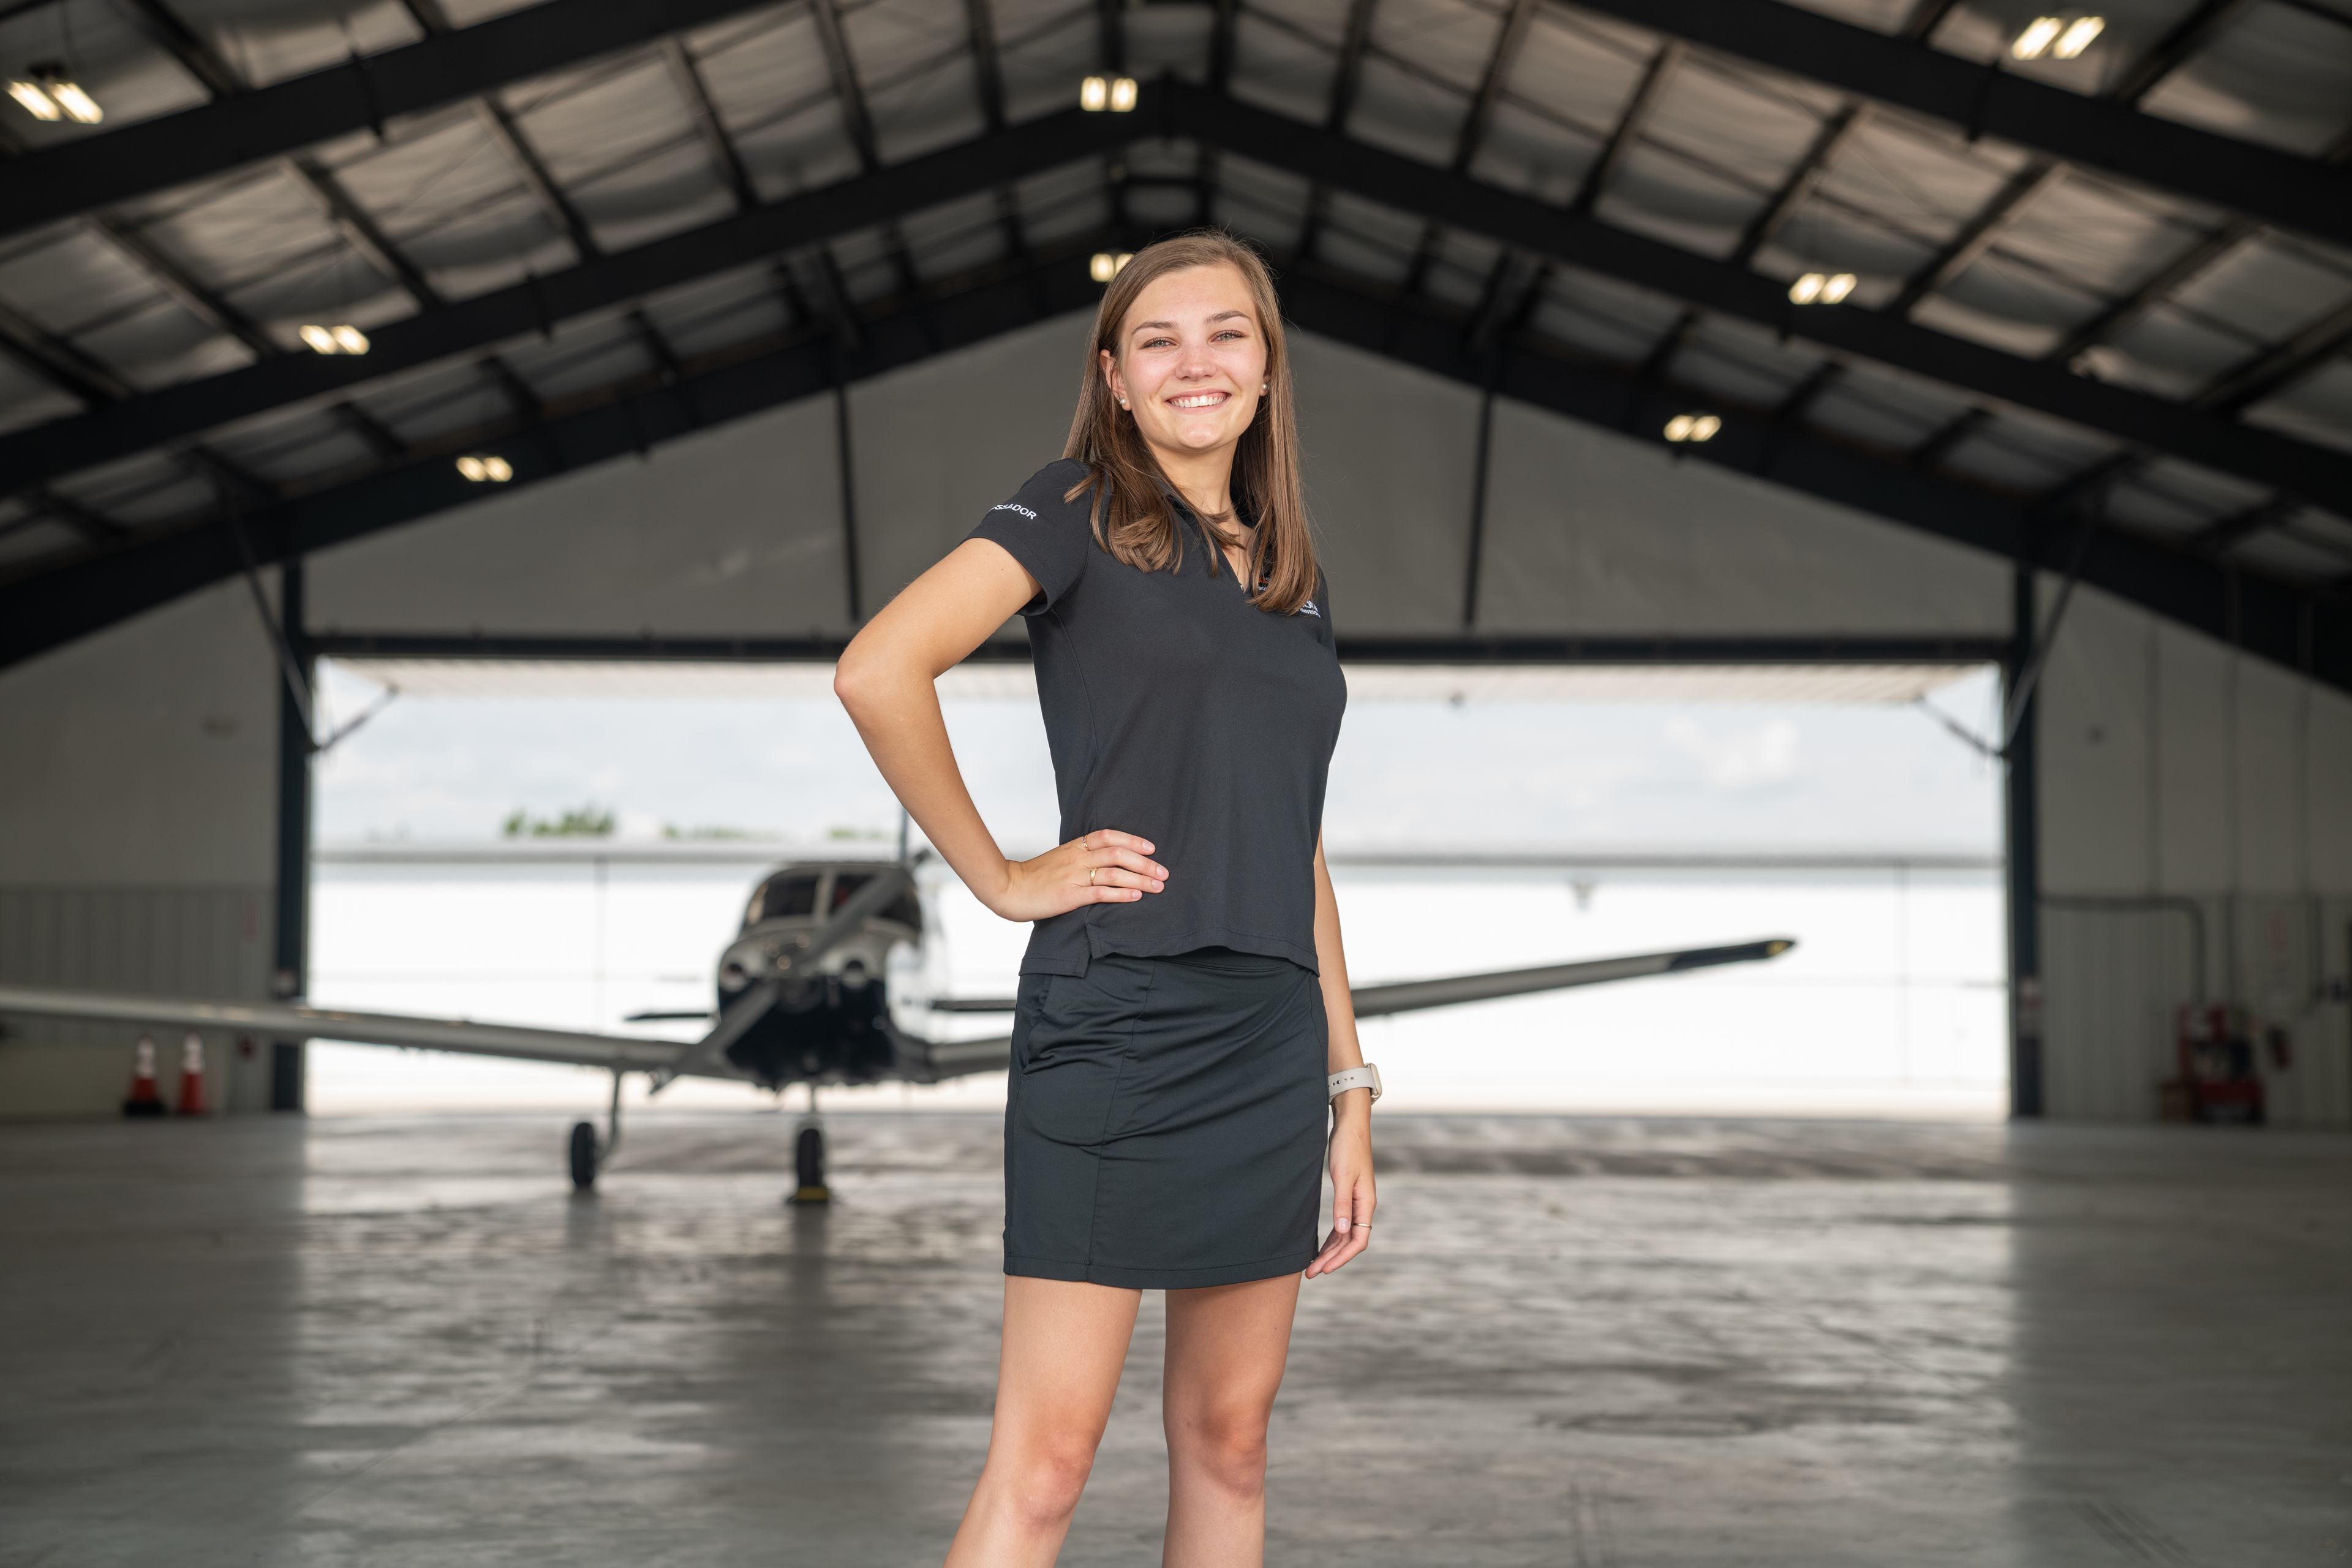 Olivia Thornton poses in an airplane hangar at the BG Flight Center.